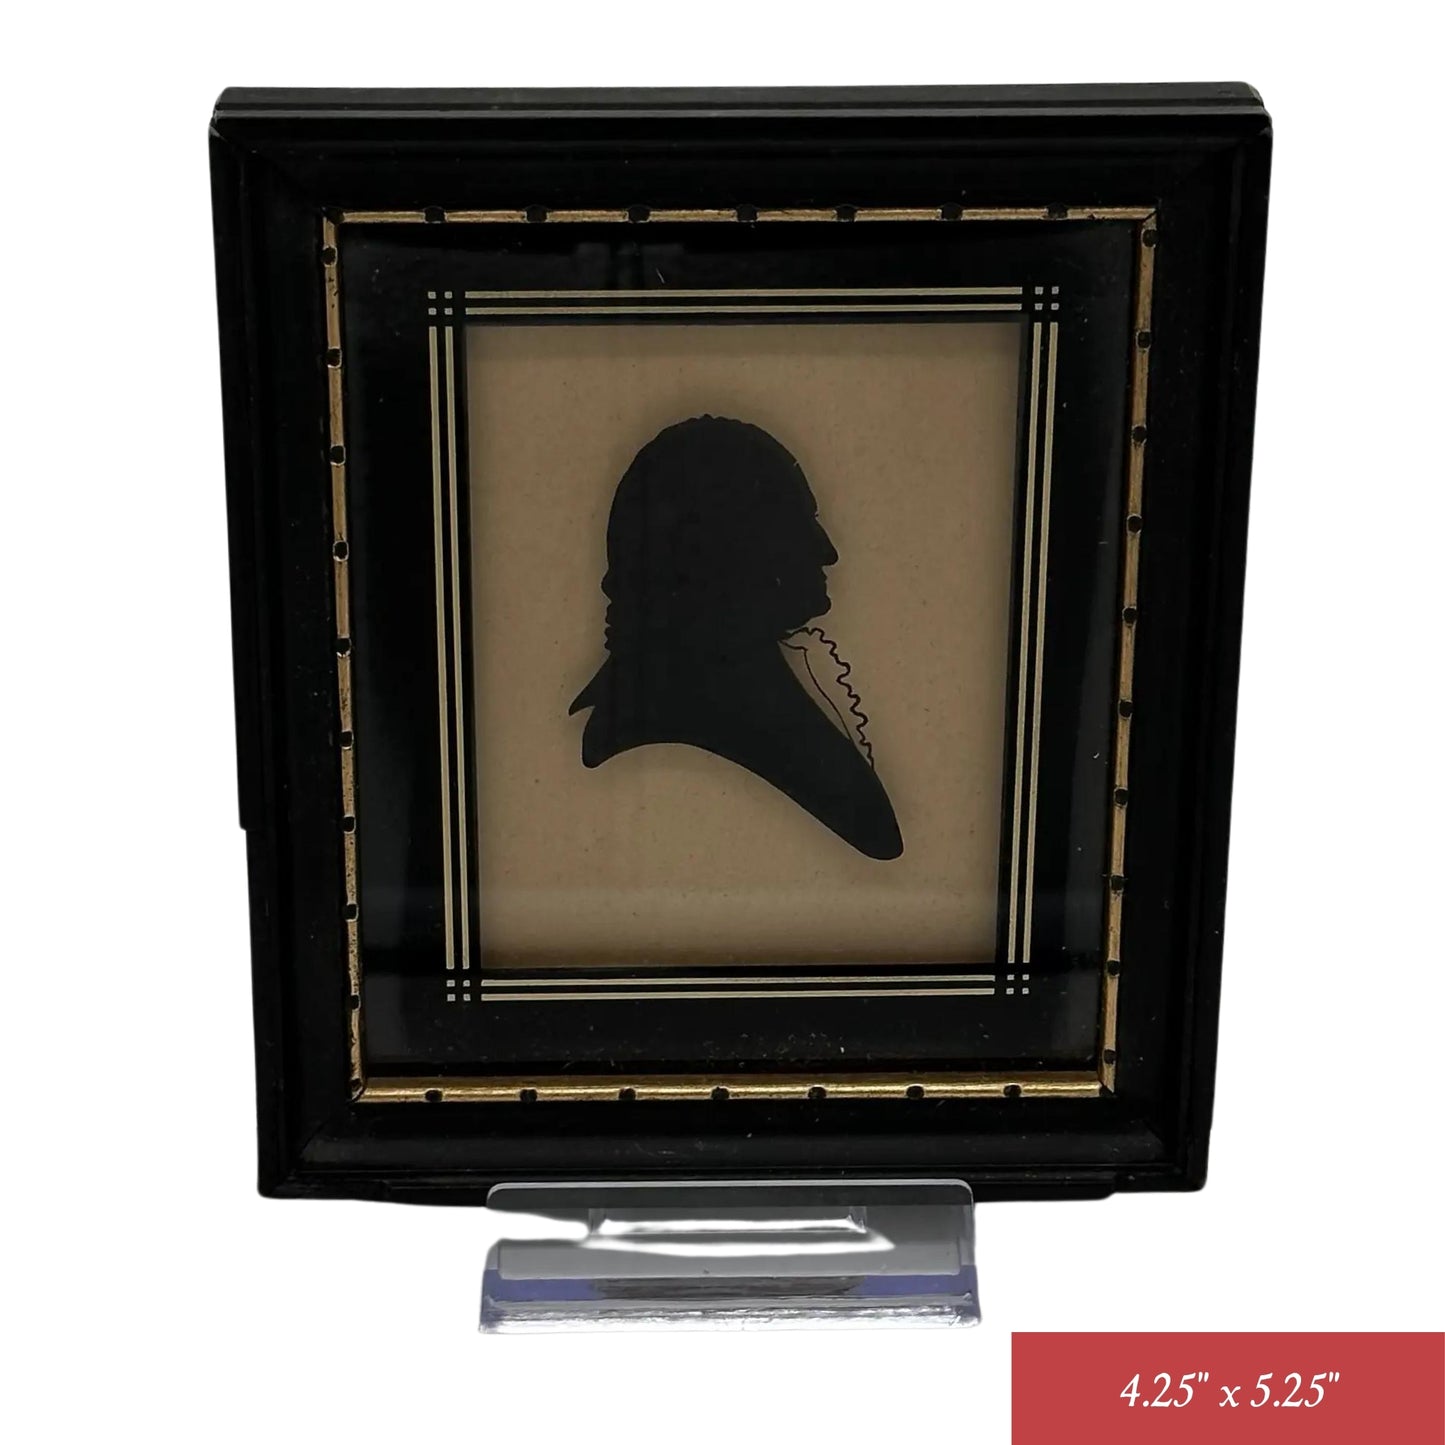 Small, framed George Washington silhouettes